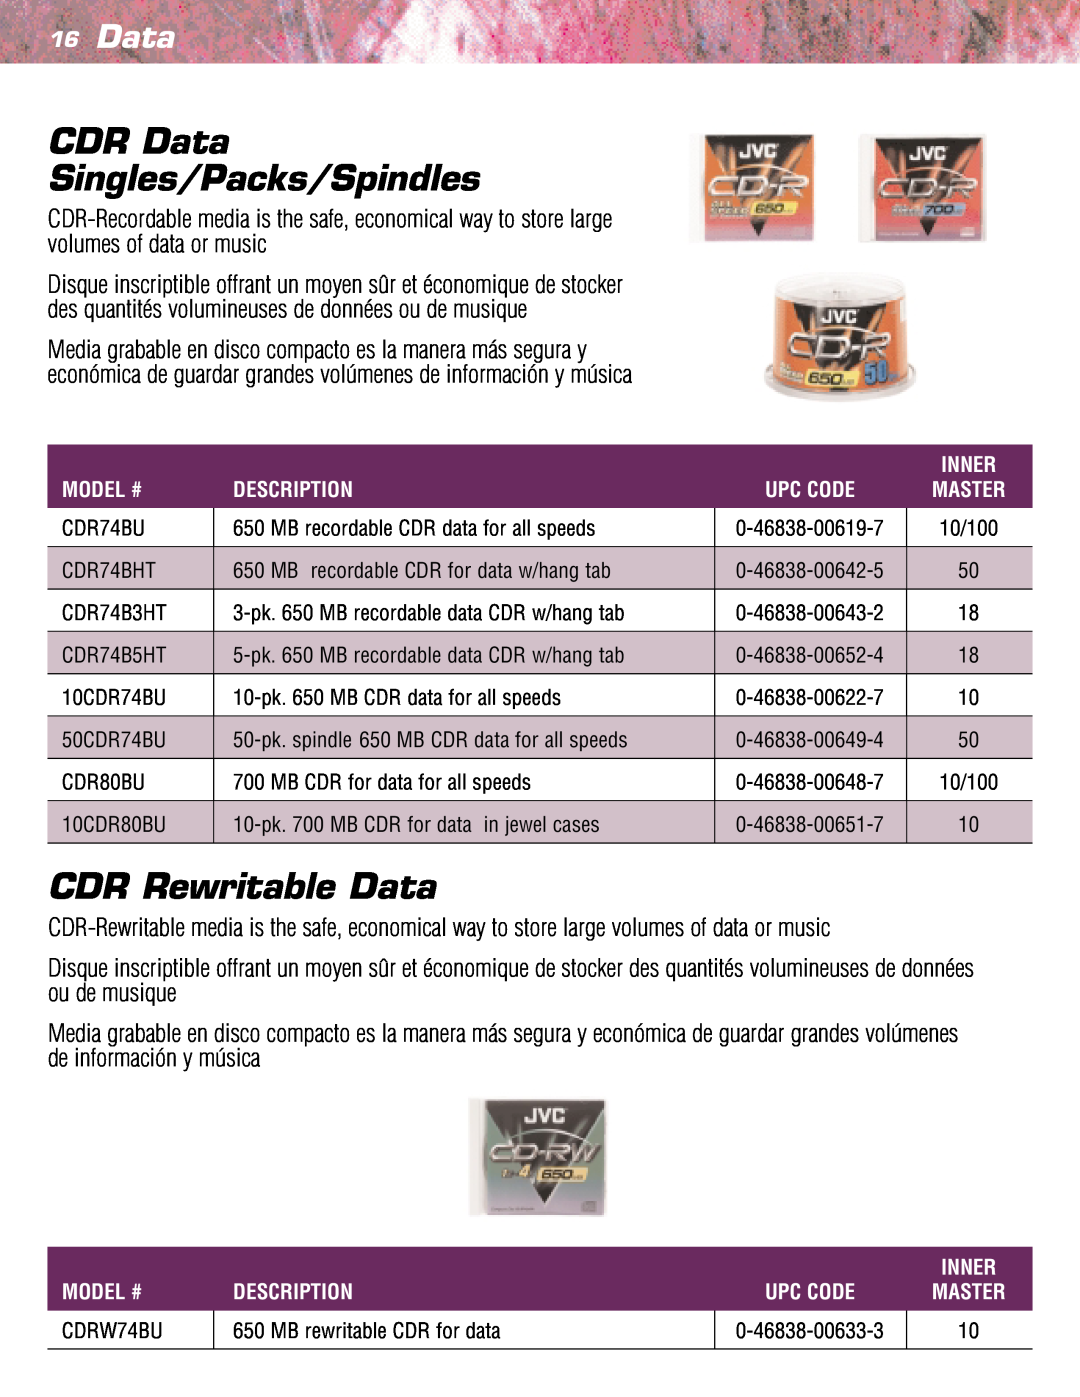 JVC TC35KL3P manual CDR Data Singles/Packs/Spindles, CDR Rewritable Data 